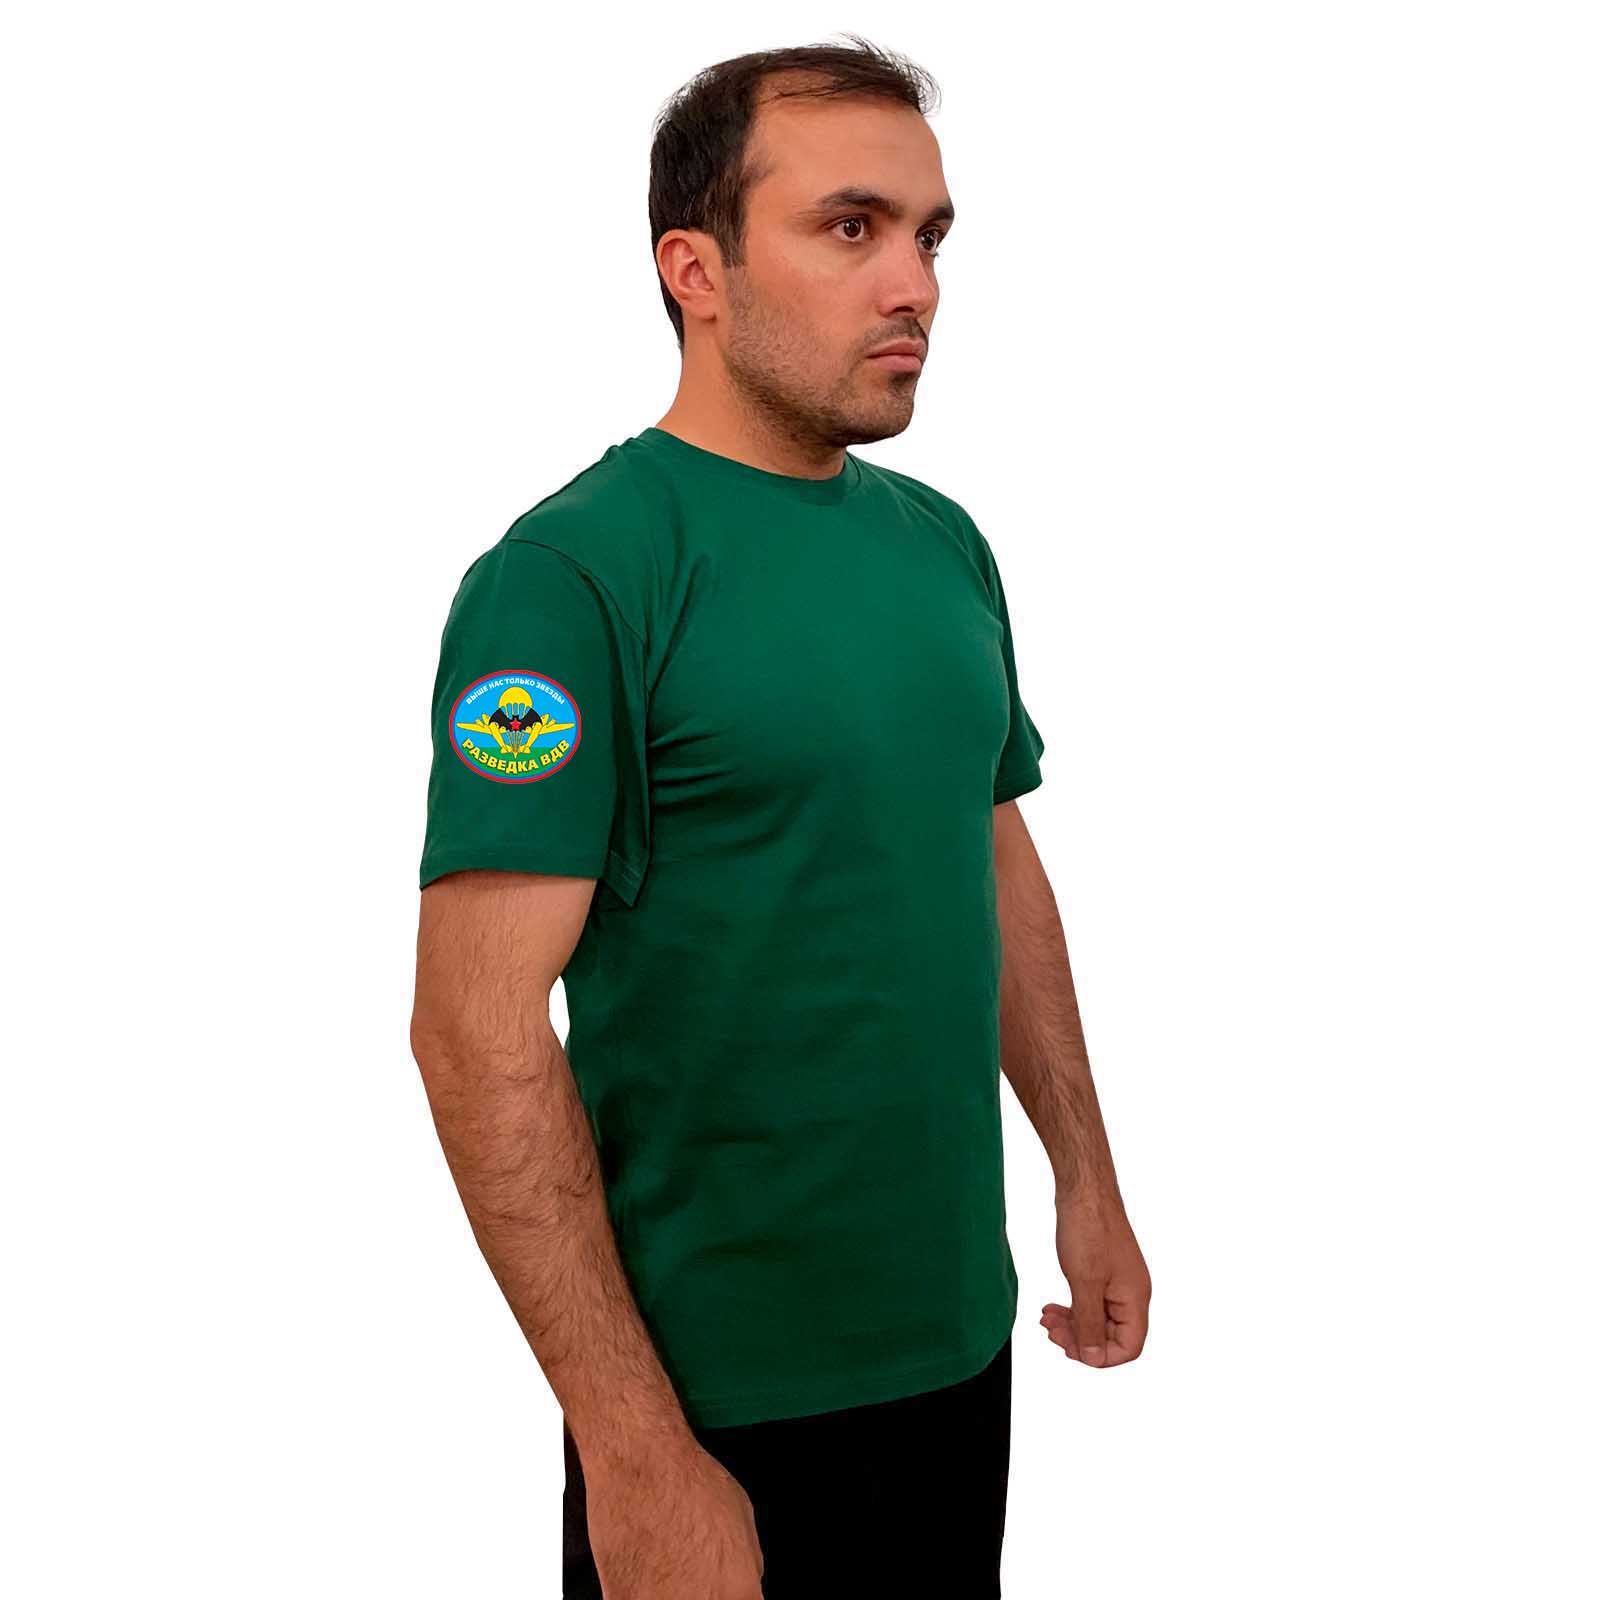 Зелёная футболка с термотрансфером "Разведка ВДВ" на рукаве